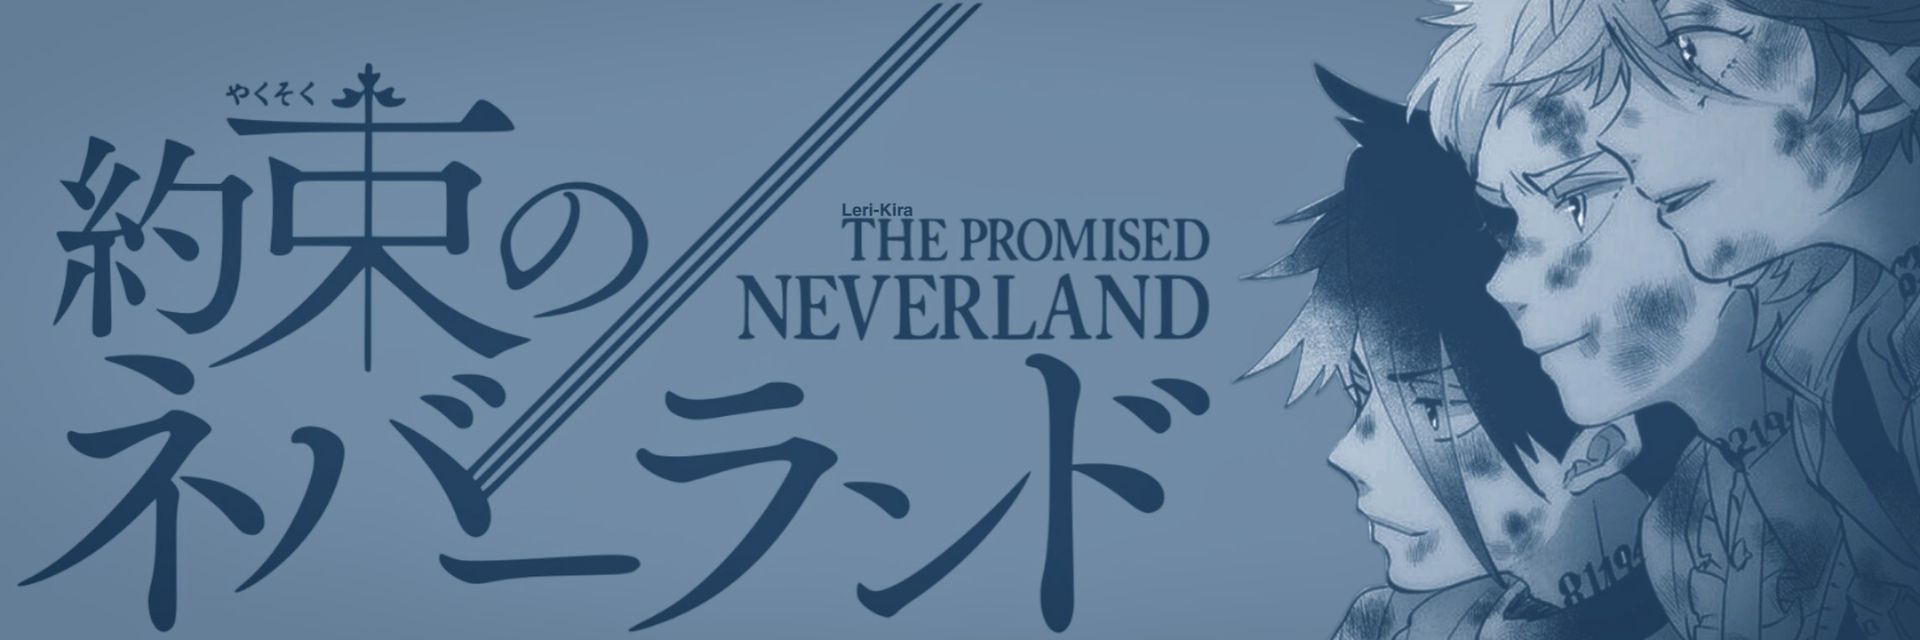 Banner the promised neverland by Posuka demizu